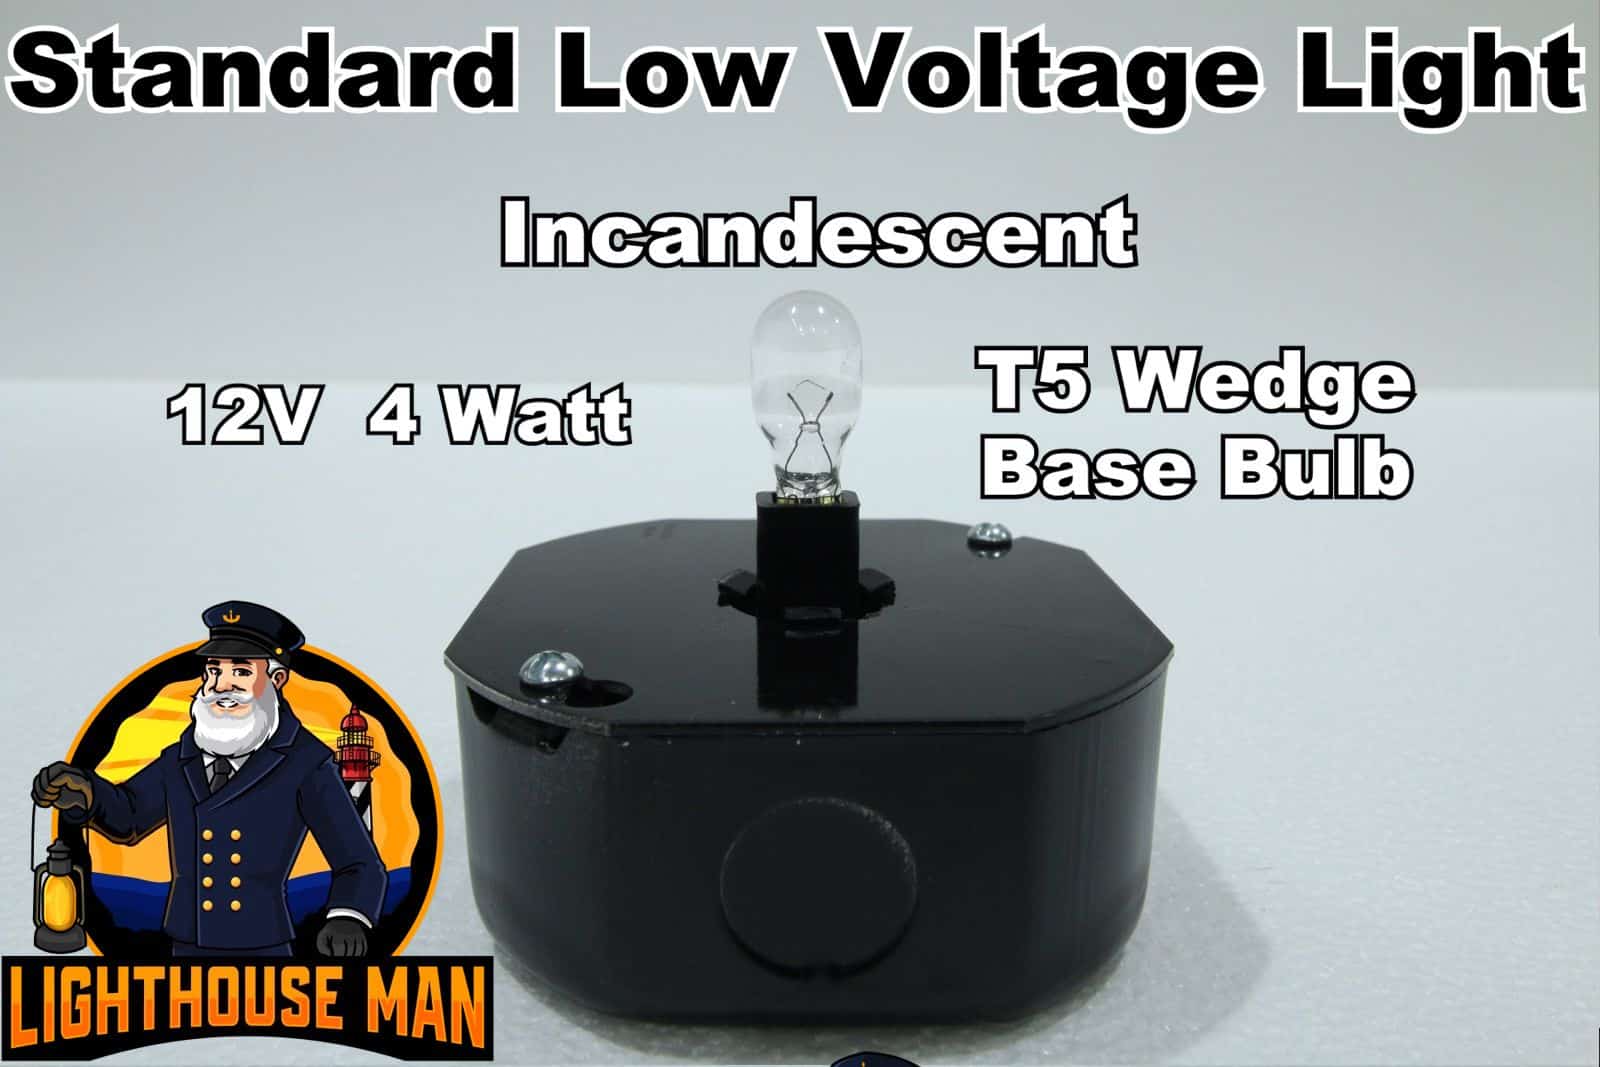 Standard Low Voltage Light with Regular Bulb